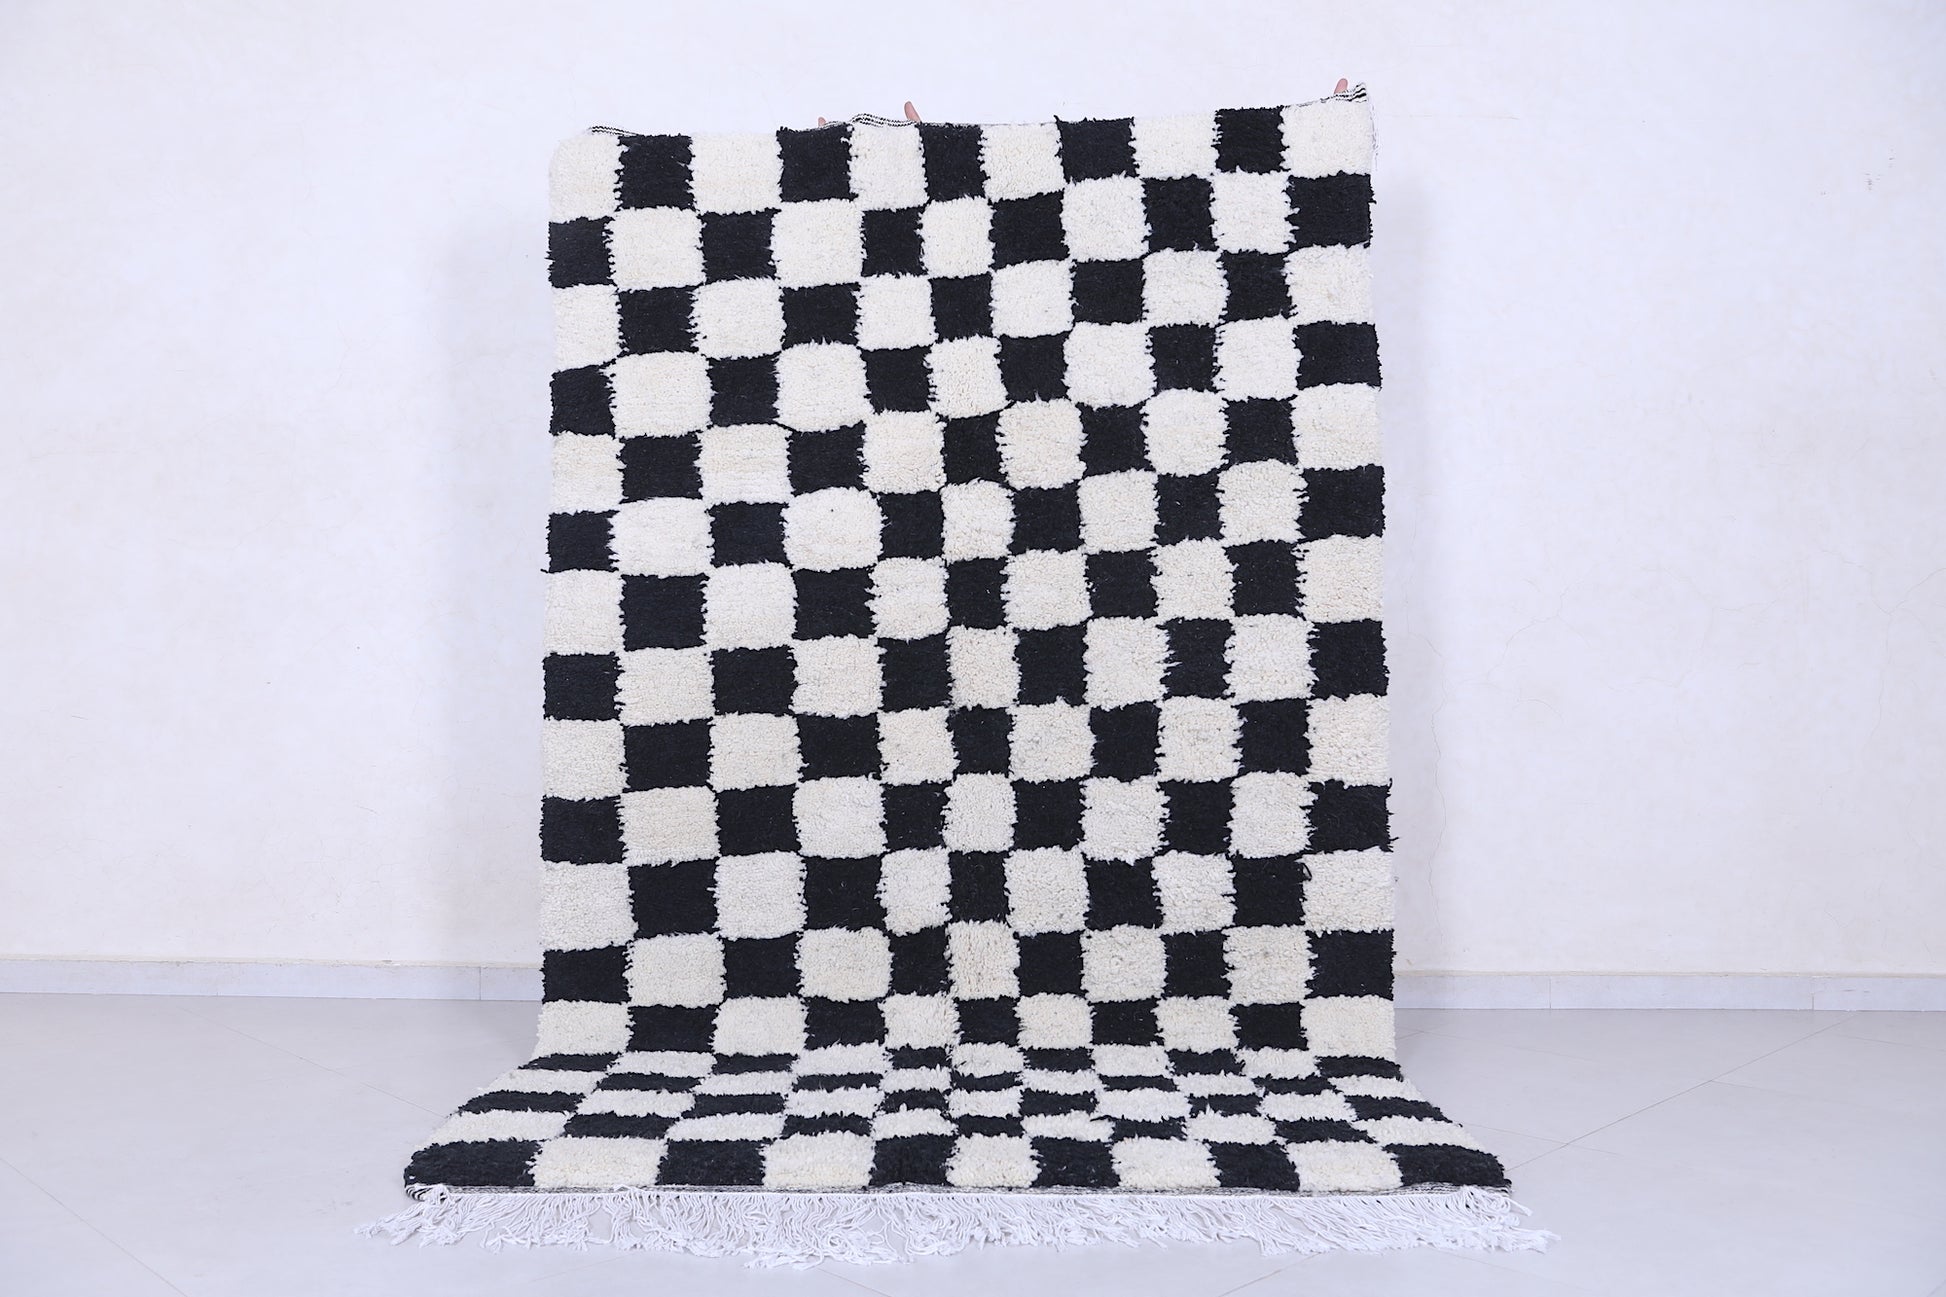 Handmade moroccan checkered rug 5.2 X 8.3 Feet